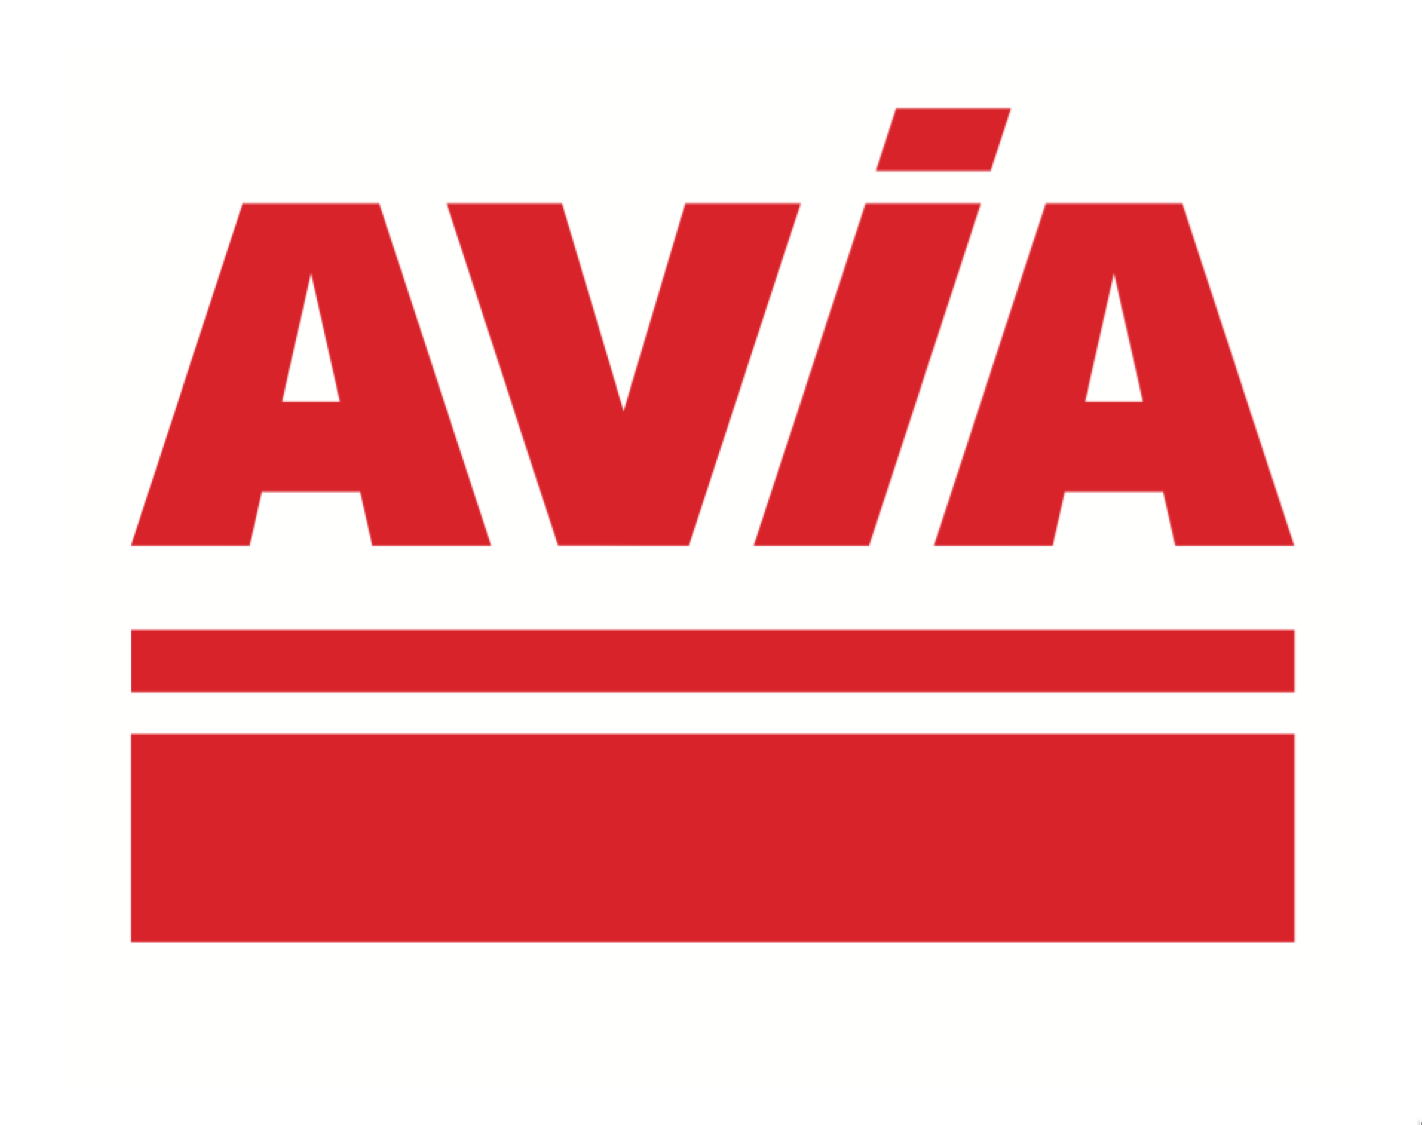 Aviva Logo - Aviva logo